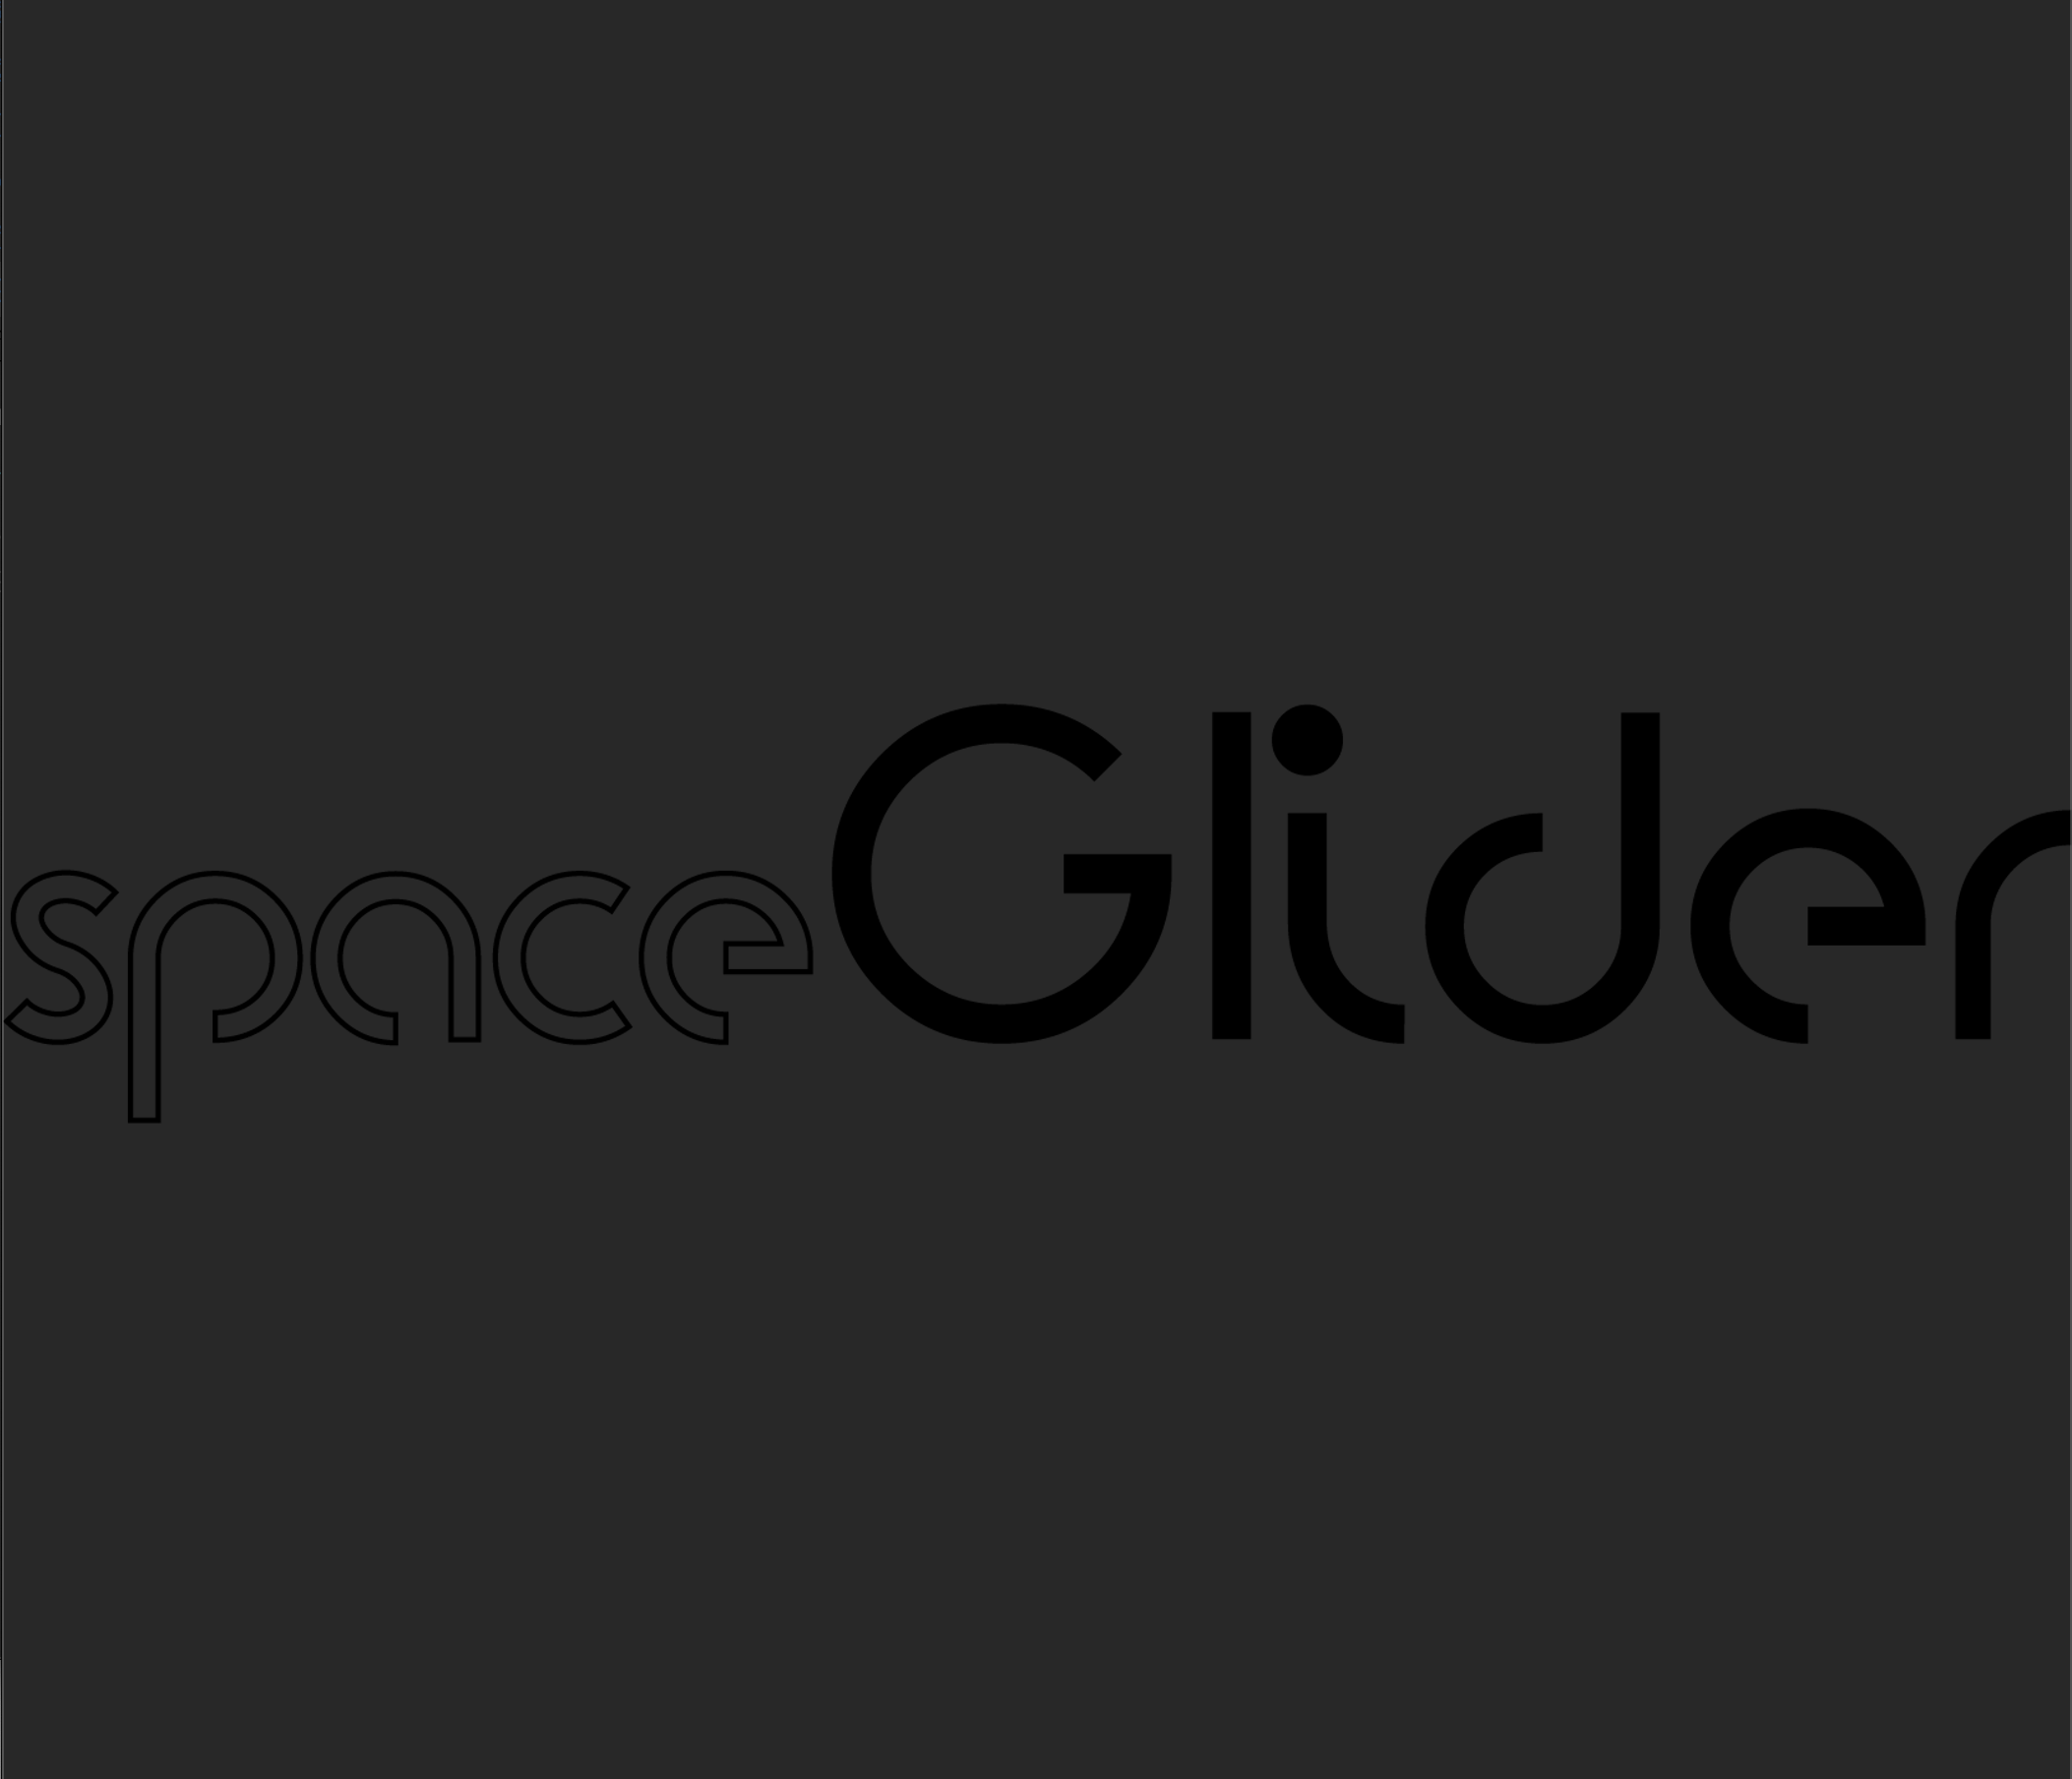 SpaceGliderLogo